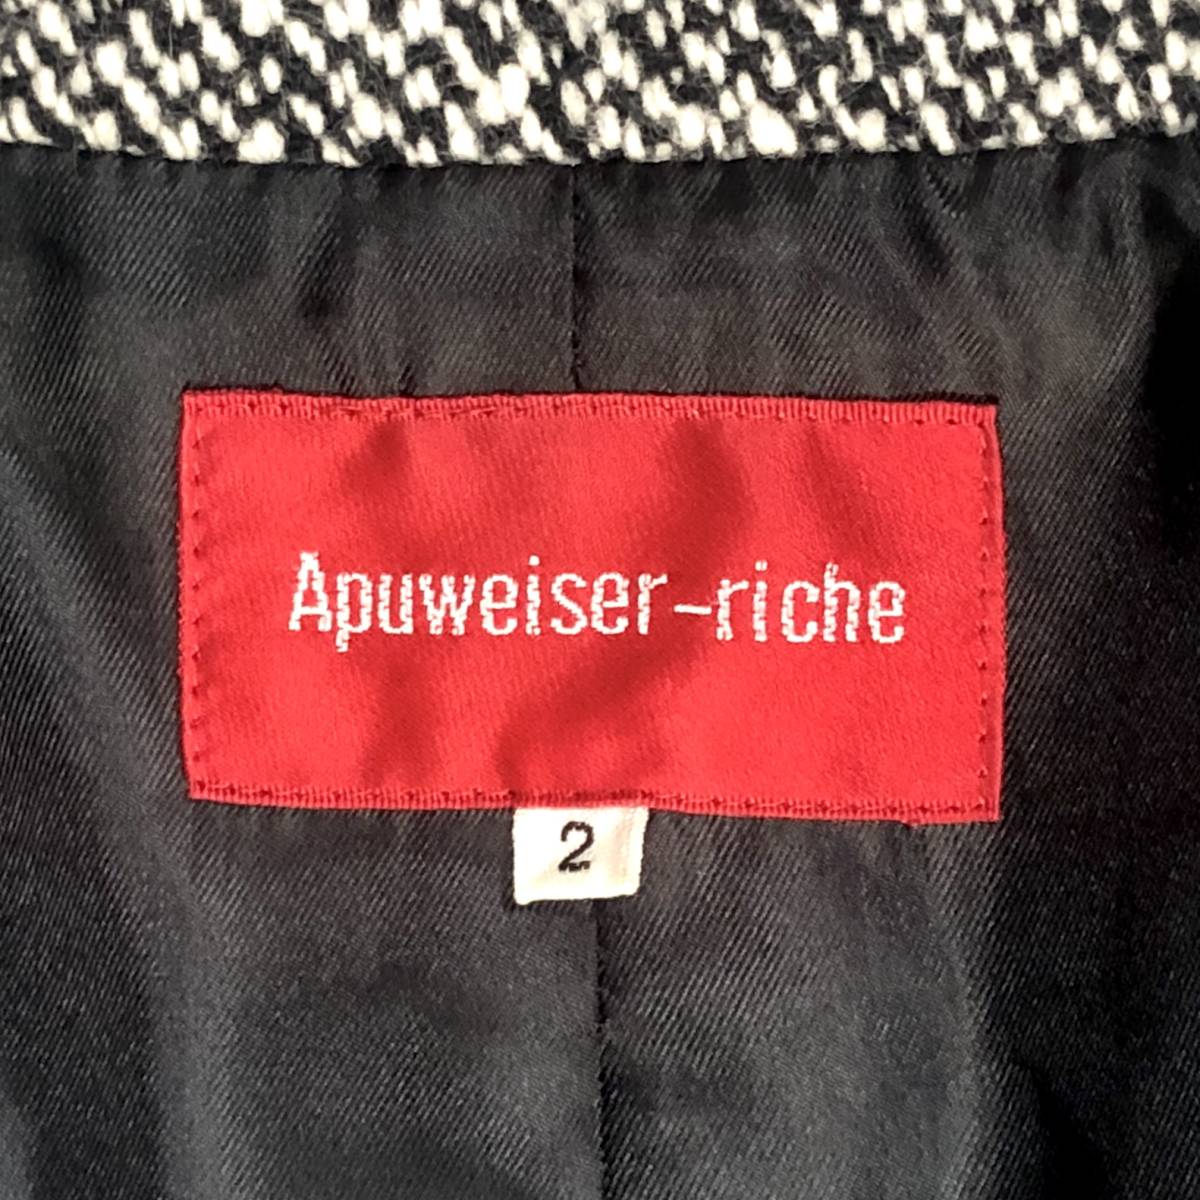 *Apuweiser-riche* размер 2 Apuweiser-riche женский чёрный цвет черный длинное пальто твид Anne gola. лента внешний J059